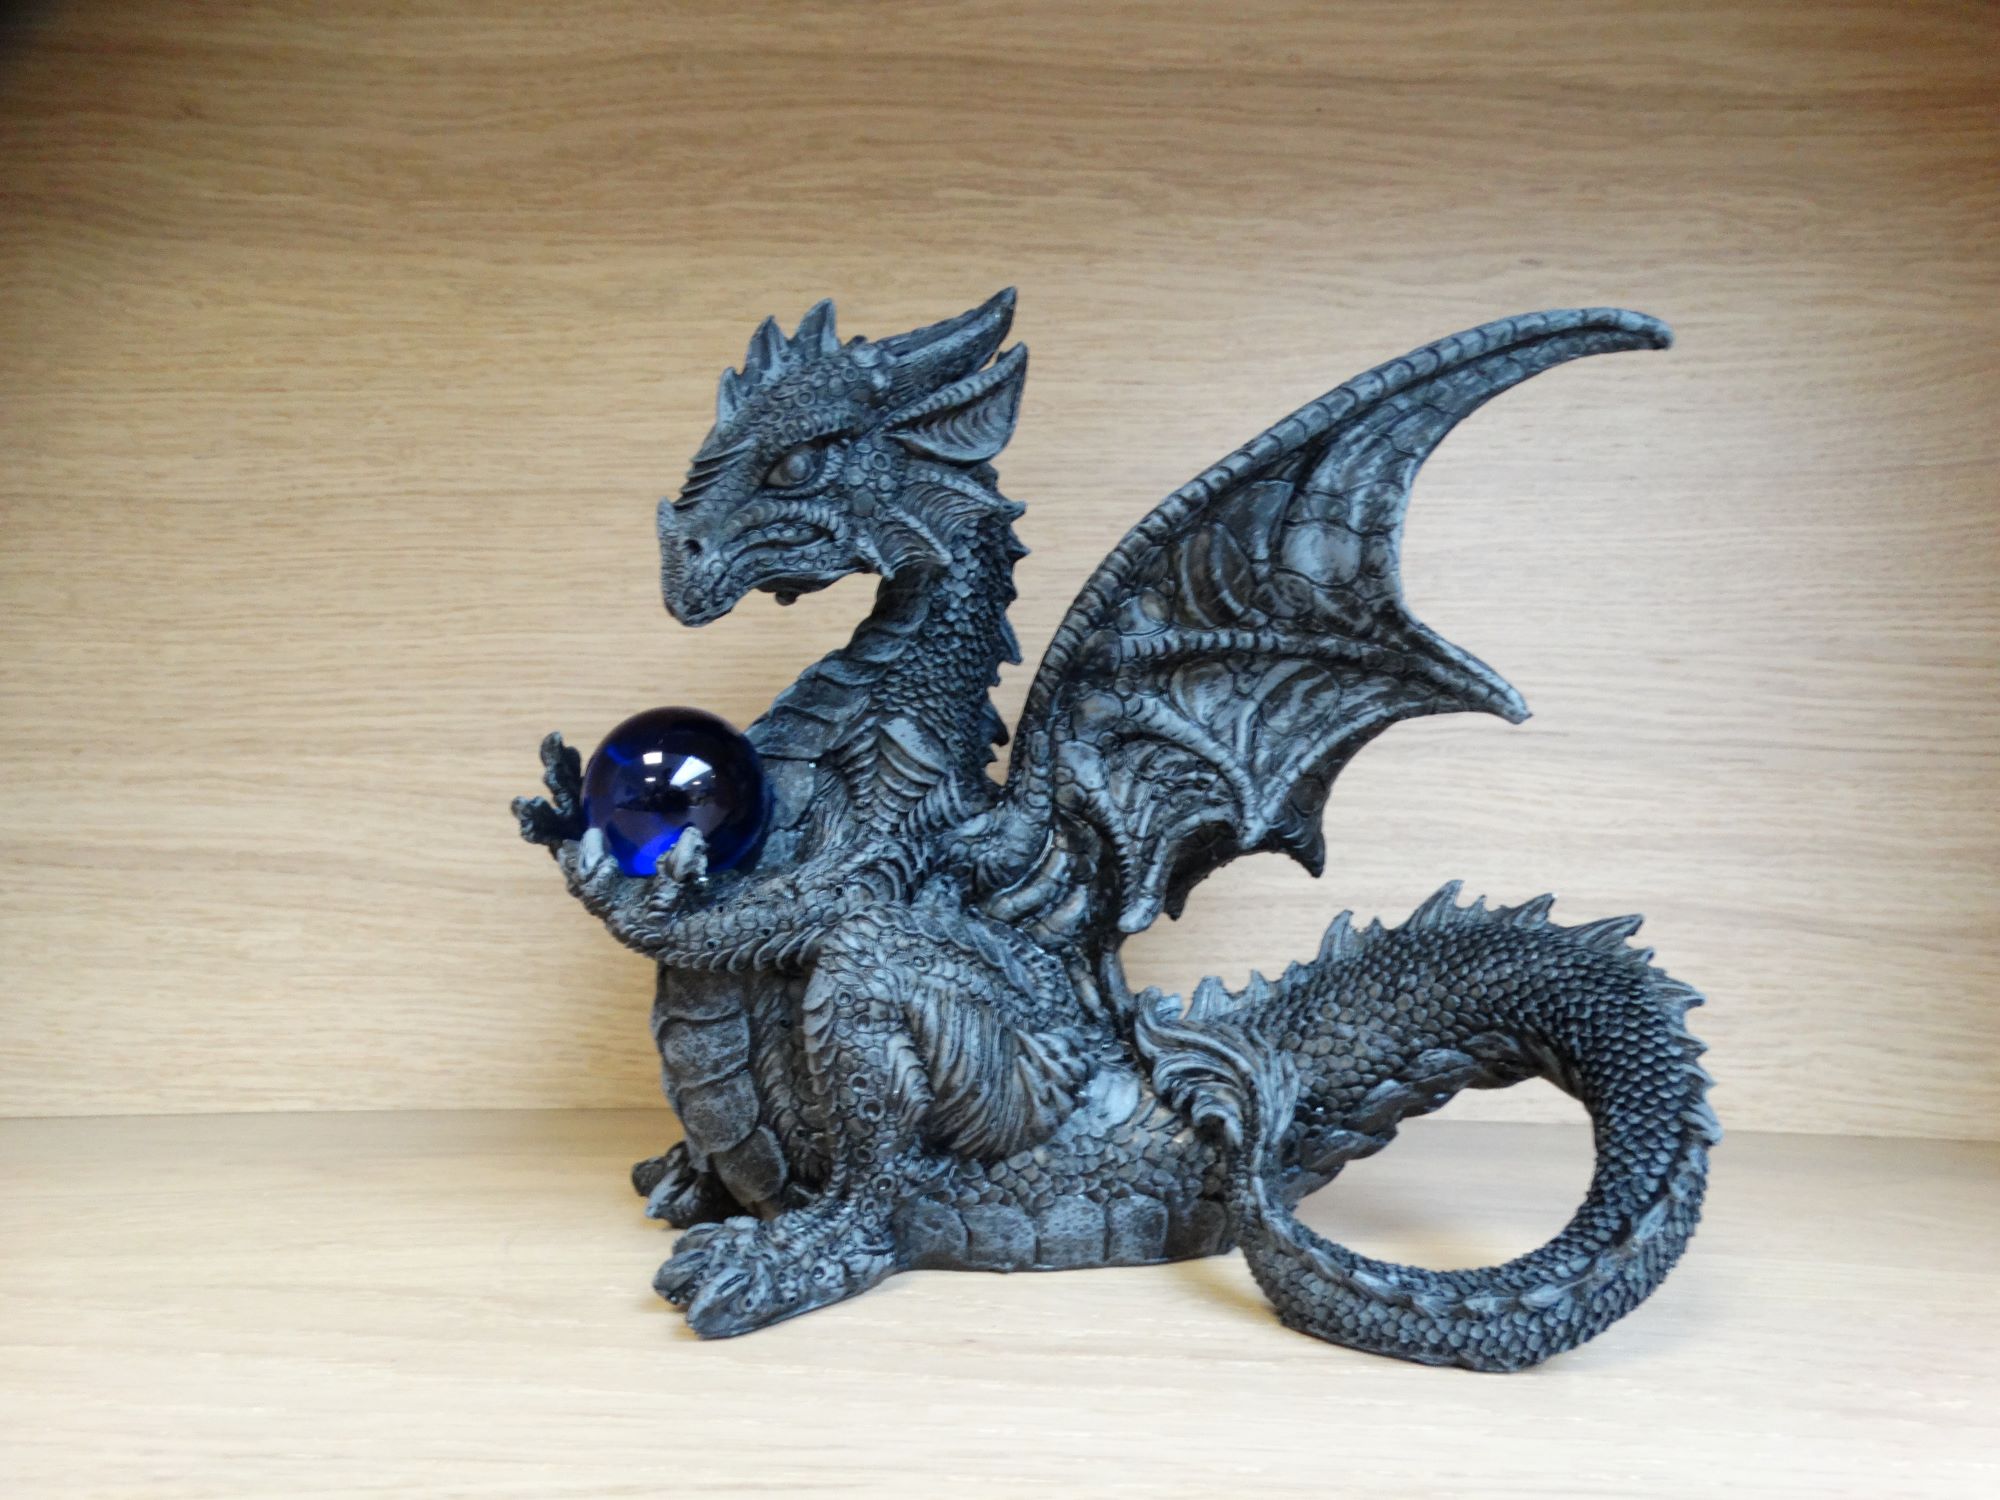 Black Dragon Lying With Blue Ball - 24cm